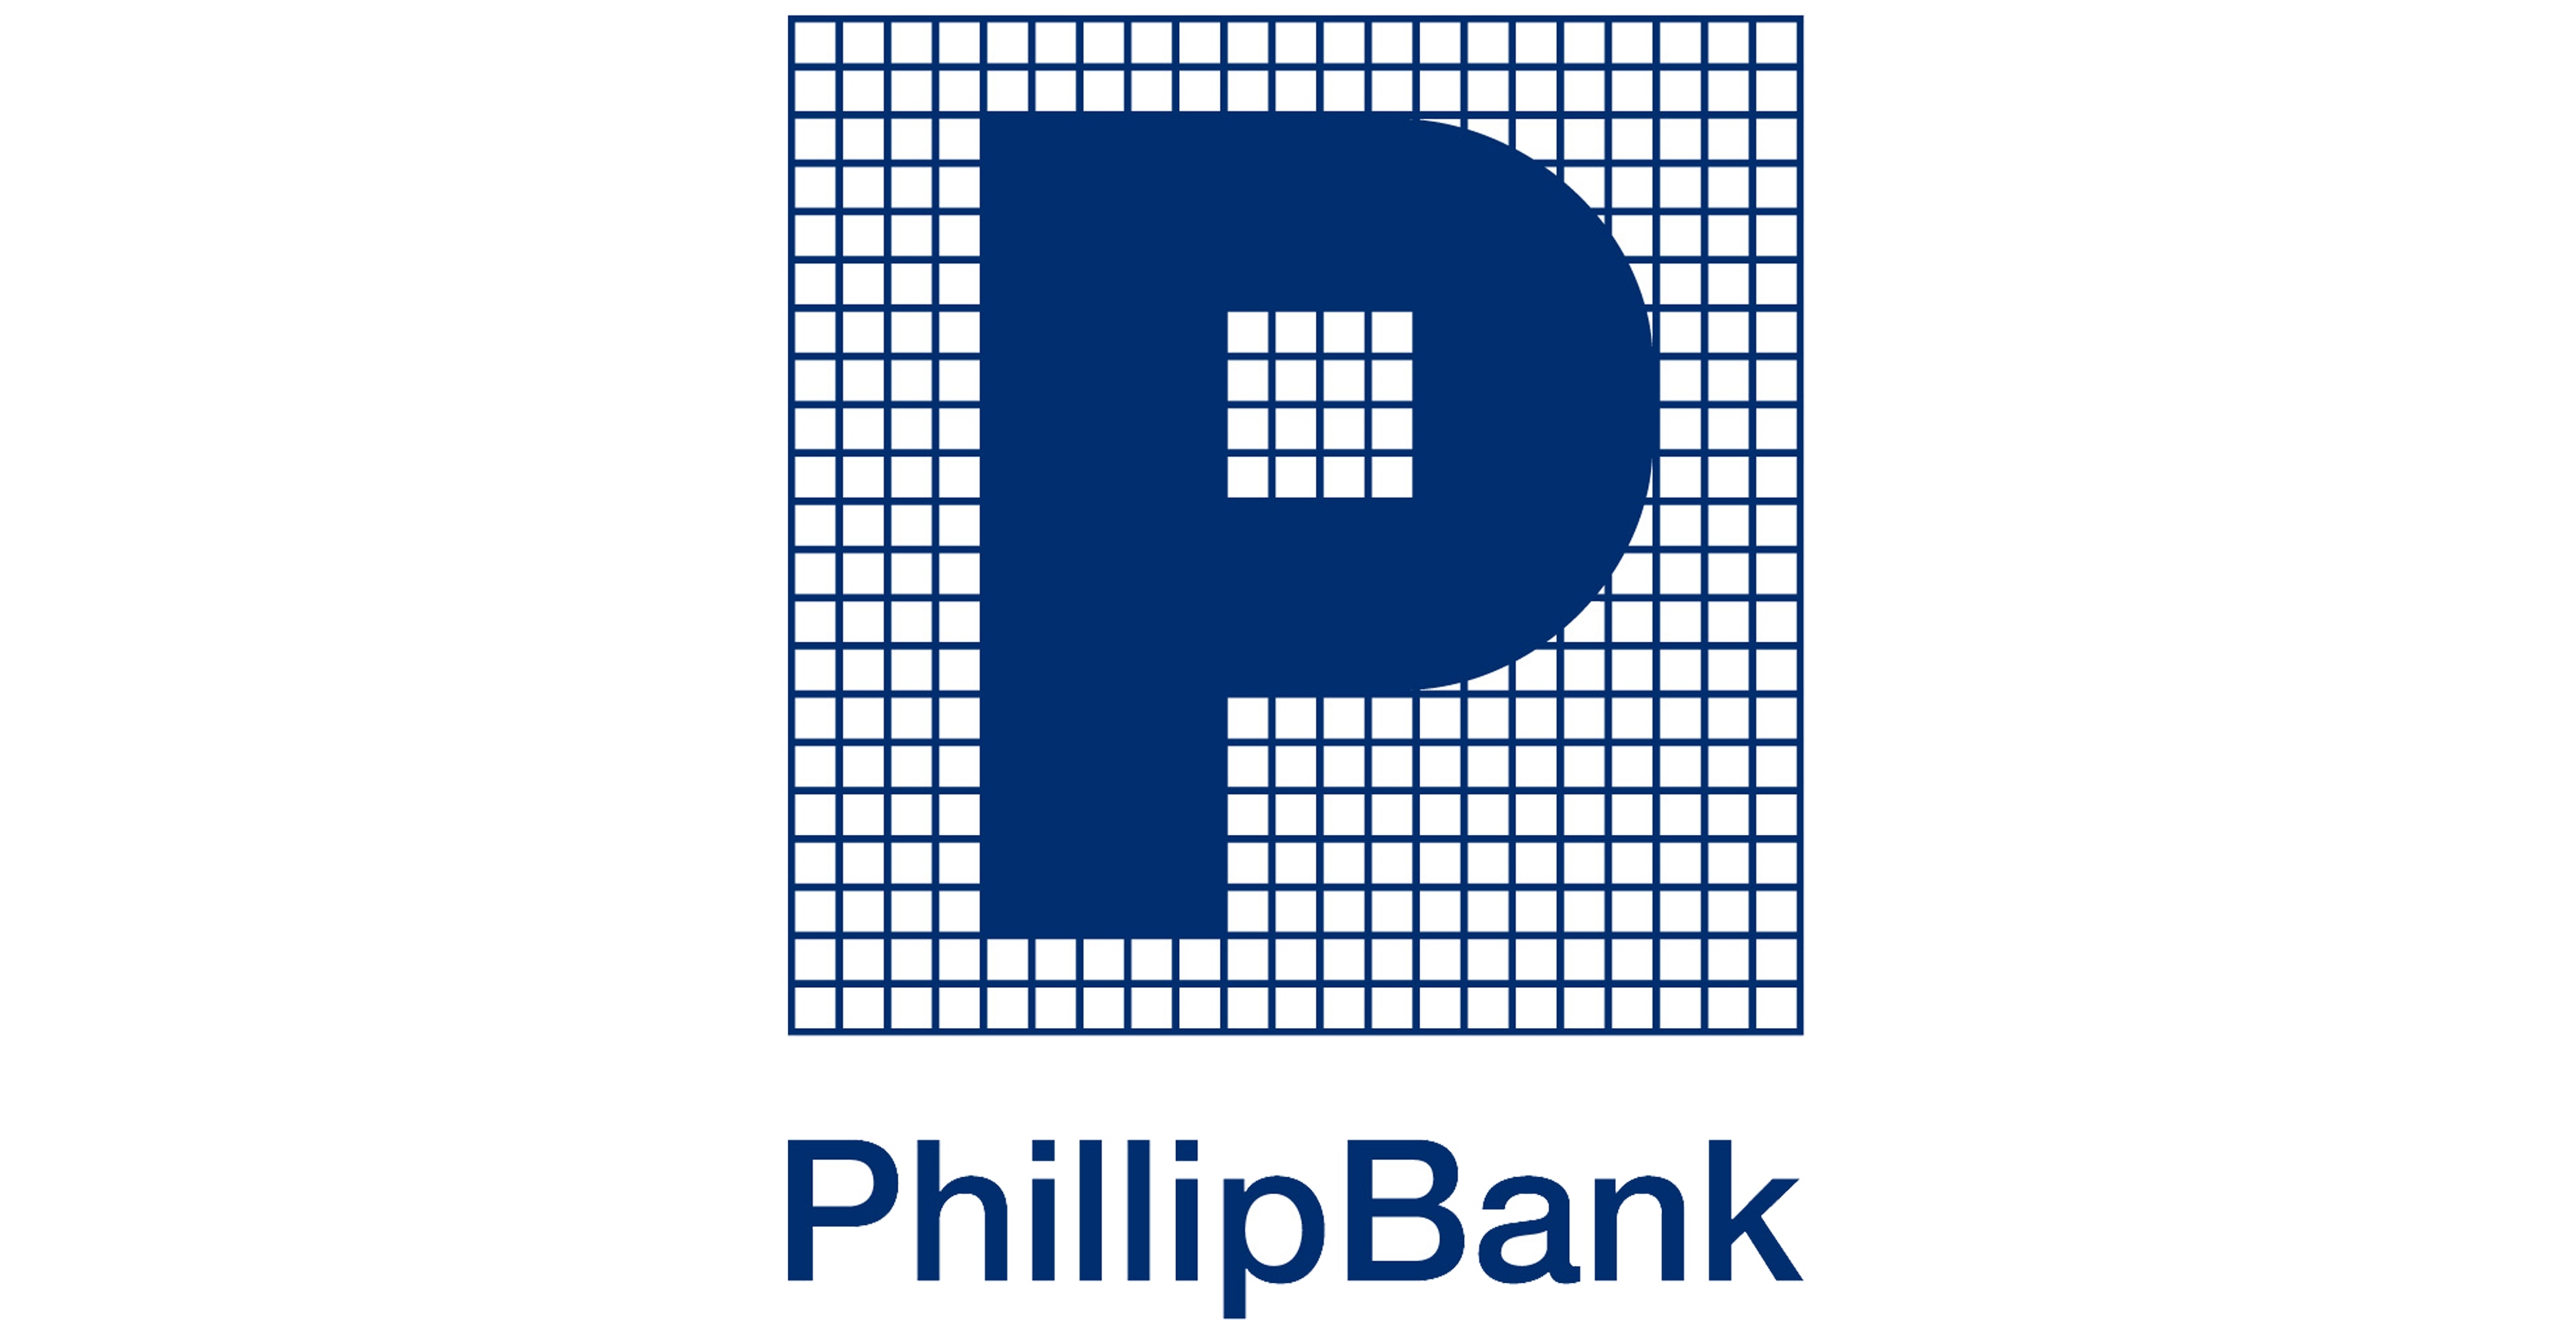 Phillip Bank 